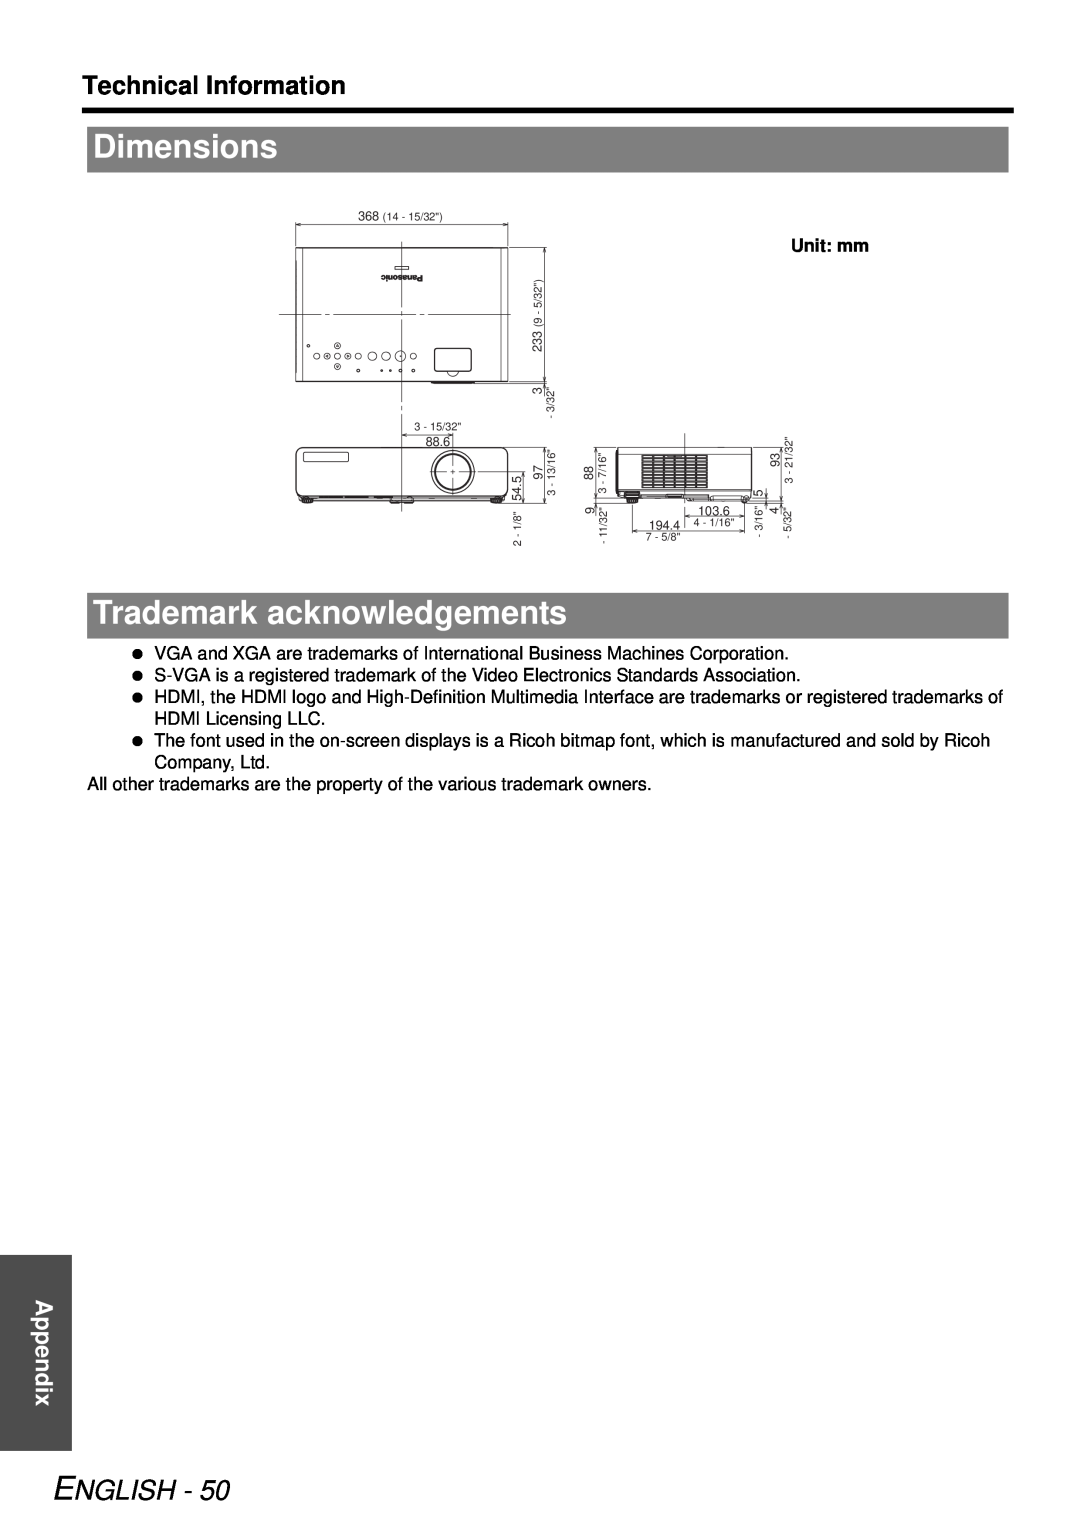 Panasonic PT-LB78U manual Dimensions, Trademark acknowledgements, English, Technical Information, Appendix 